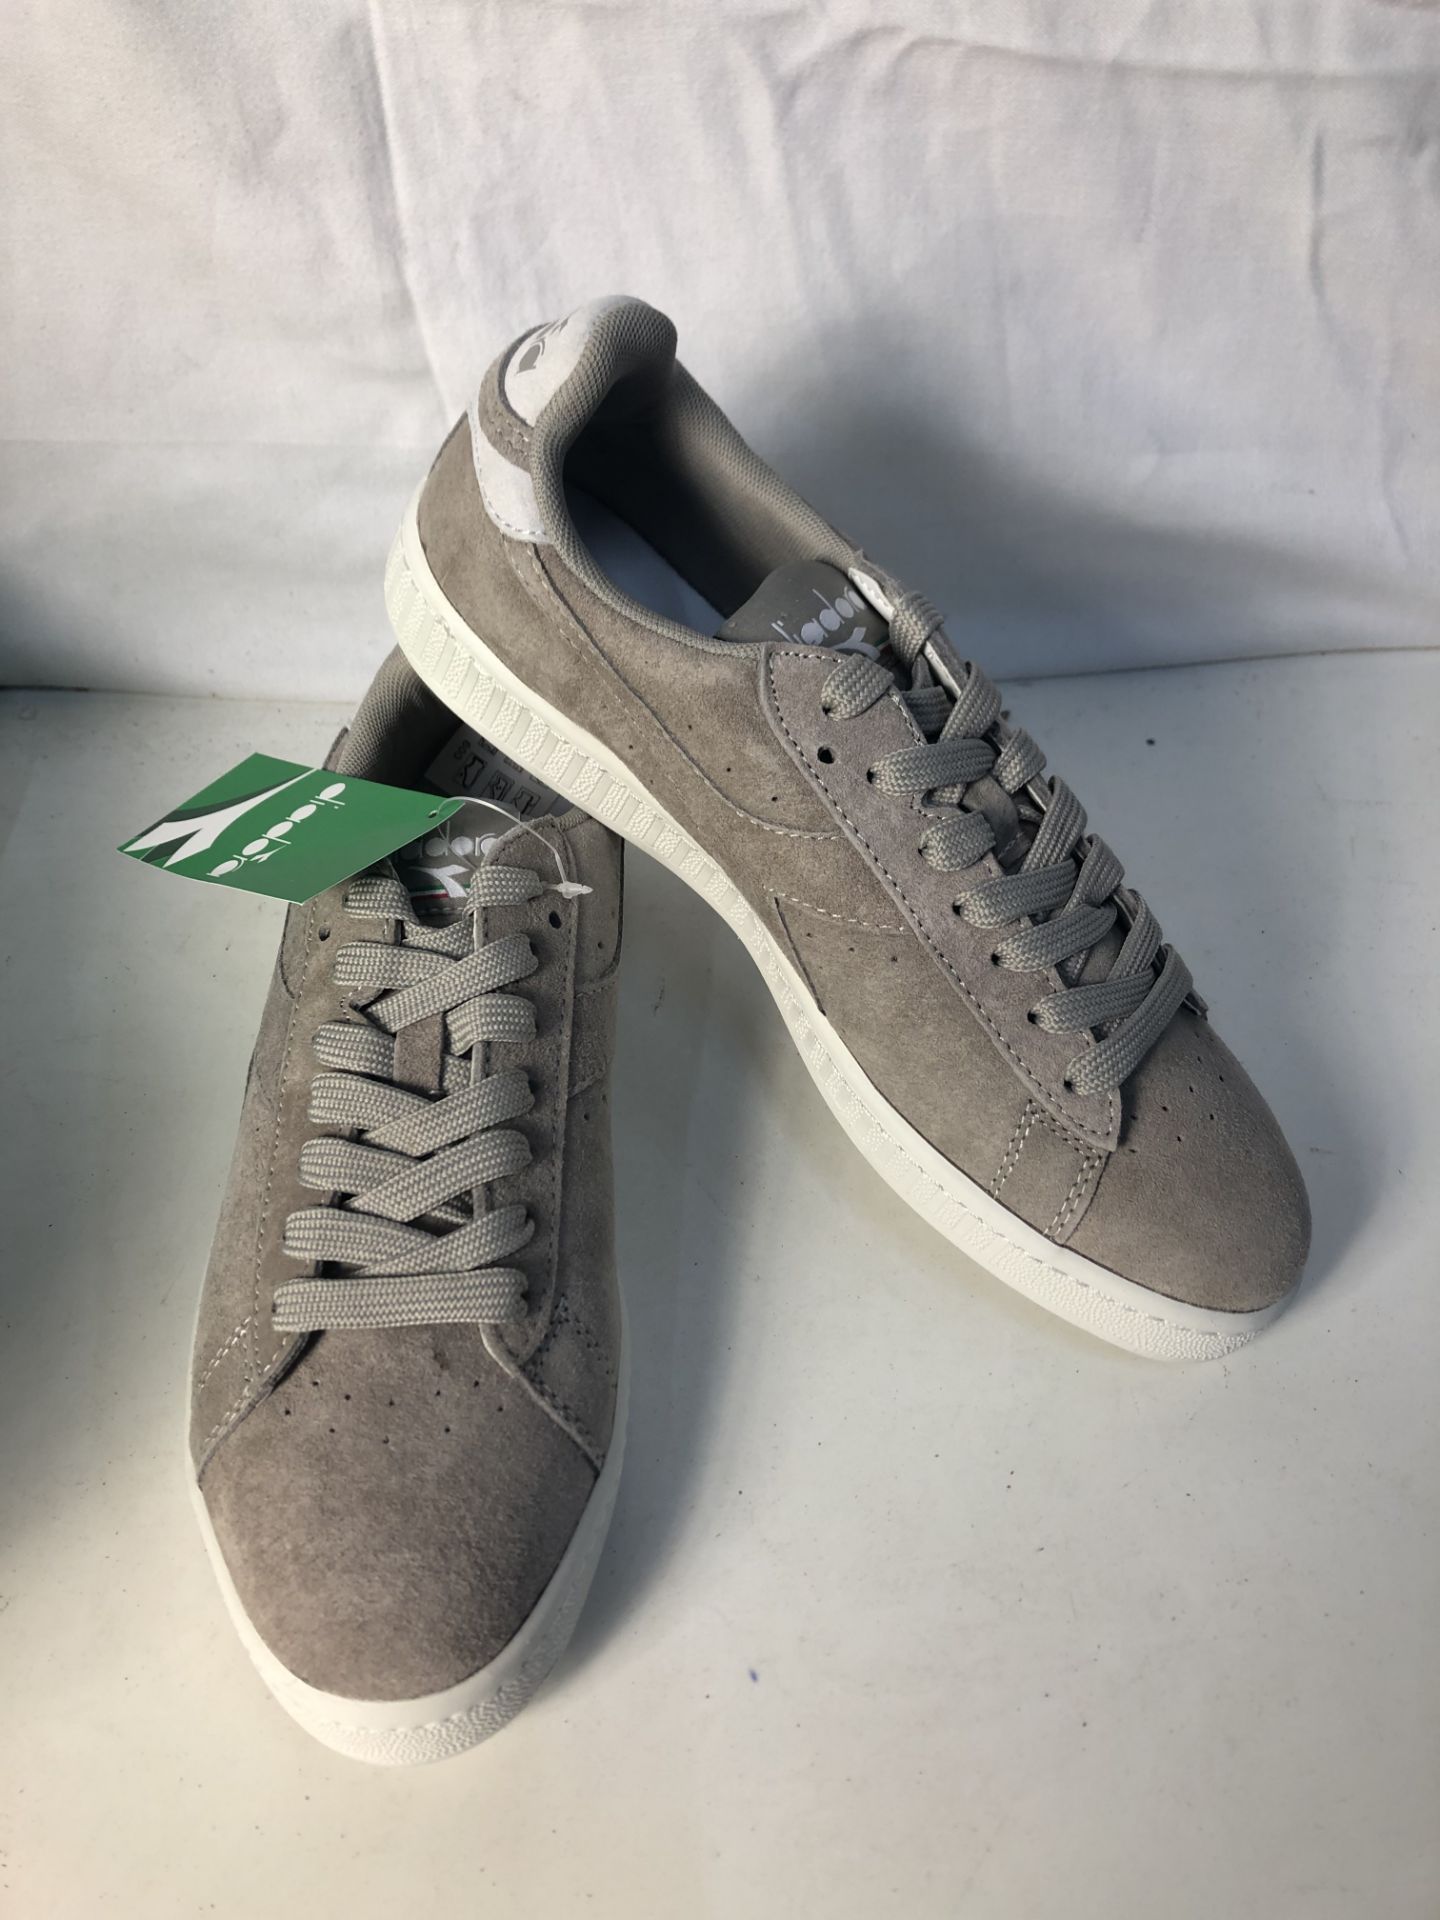 1 x Diadora Unisex Adults' Game S Sneaker Low Neck, Grey (Grigio Argento), 7 UK 171832-75025 Size: - Image 2 of 3